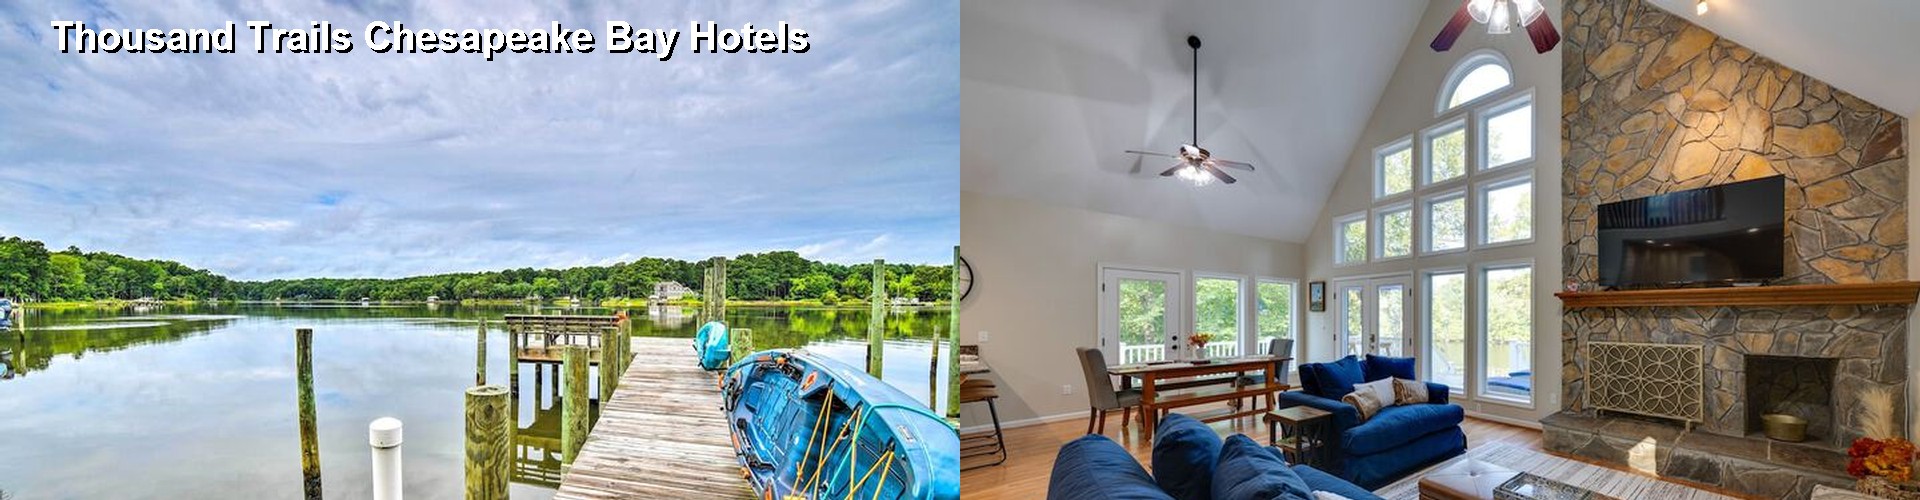 5 Best Hotels near Thousand Trails Chesapeake Bay